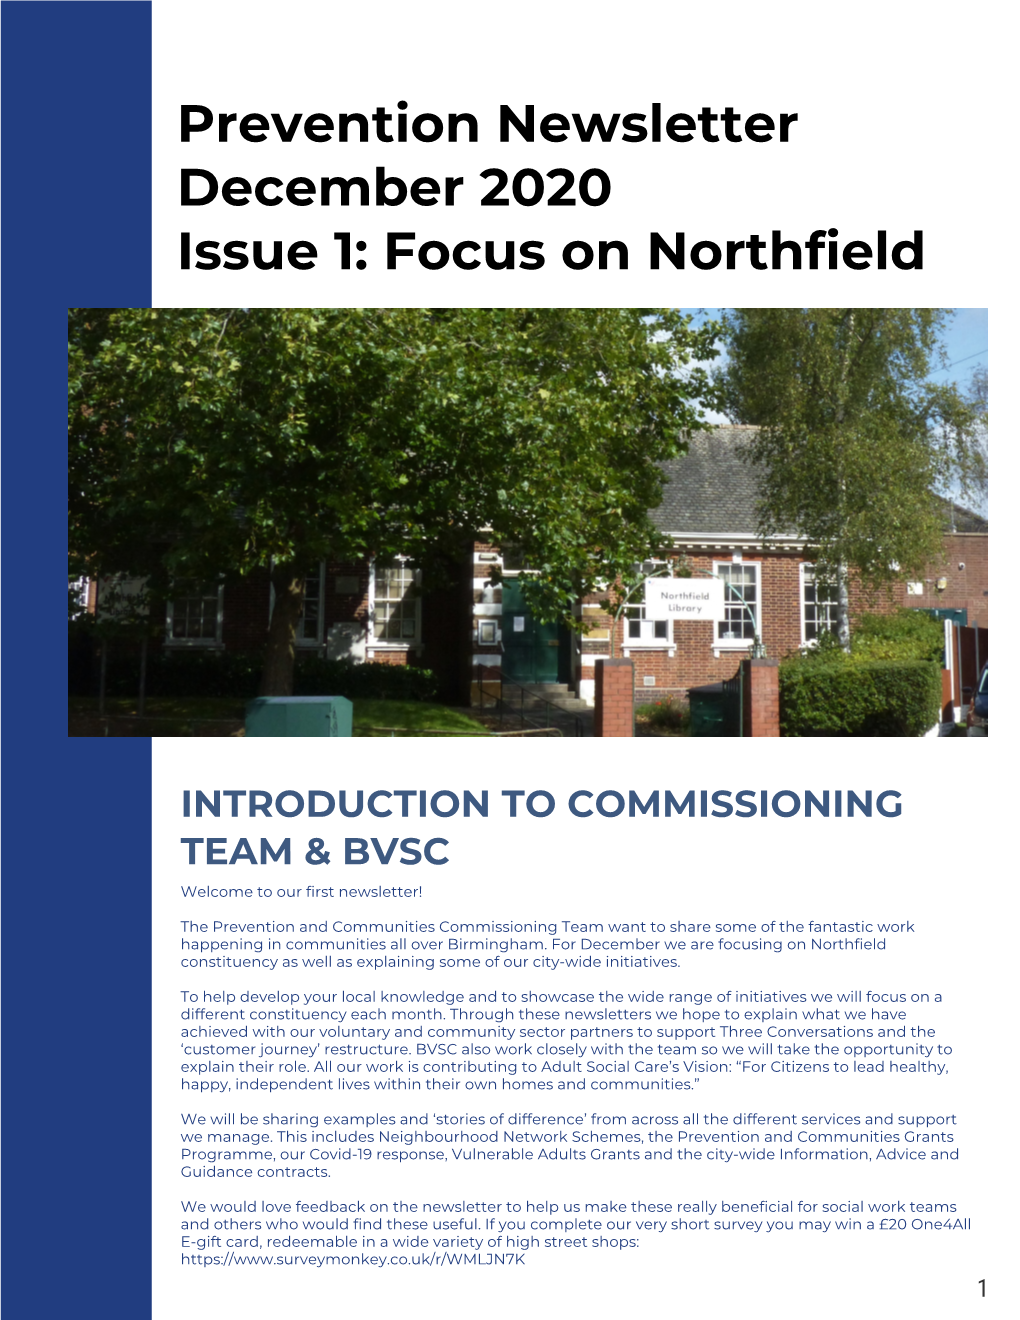 Prevention Newsletter December 2020 Issue 1: Focus on Northfield